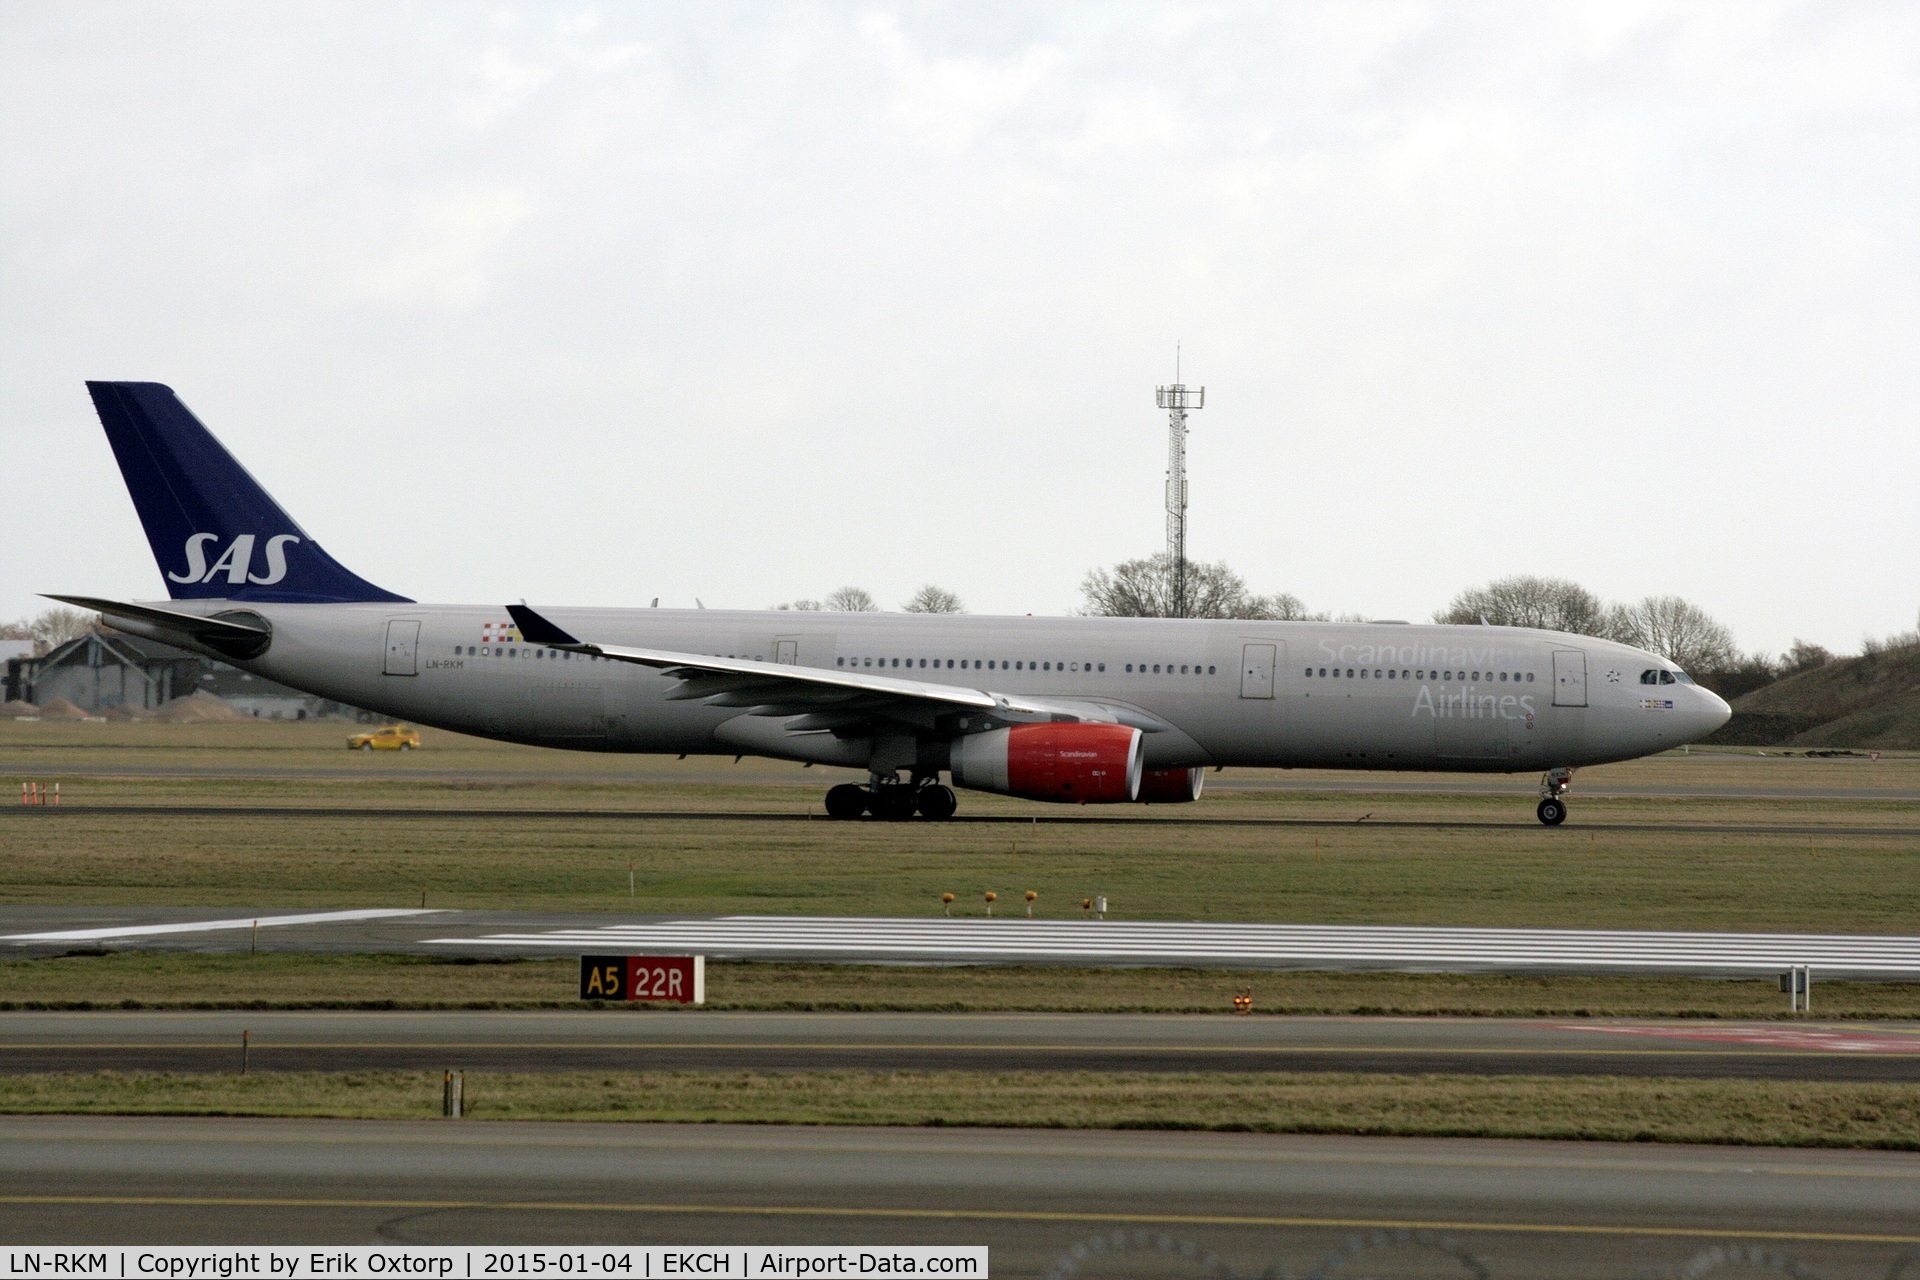 LN-RKM, 2002 Airbus A330-343X C/N 496, LN-RKM taxing for take off rw 04R